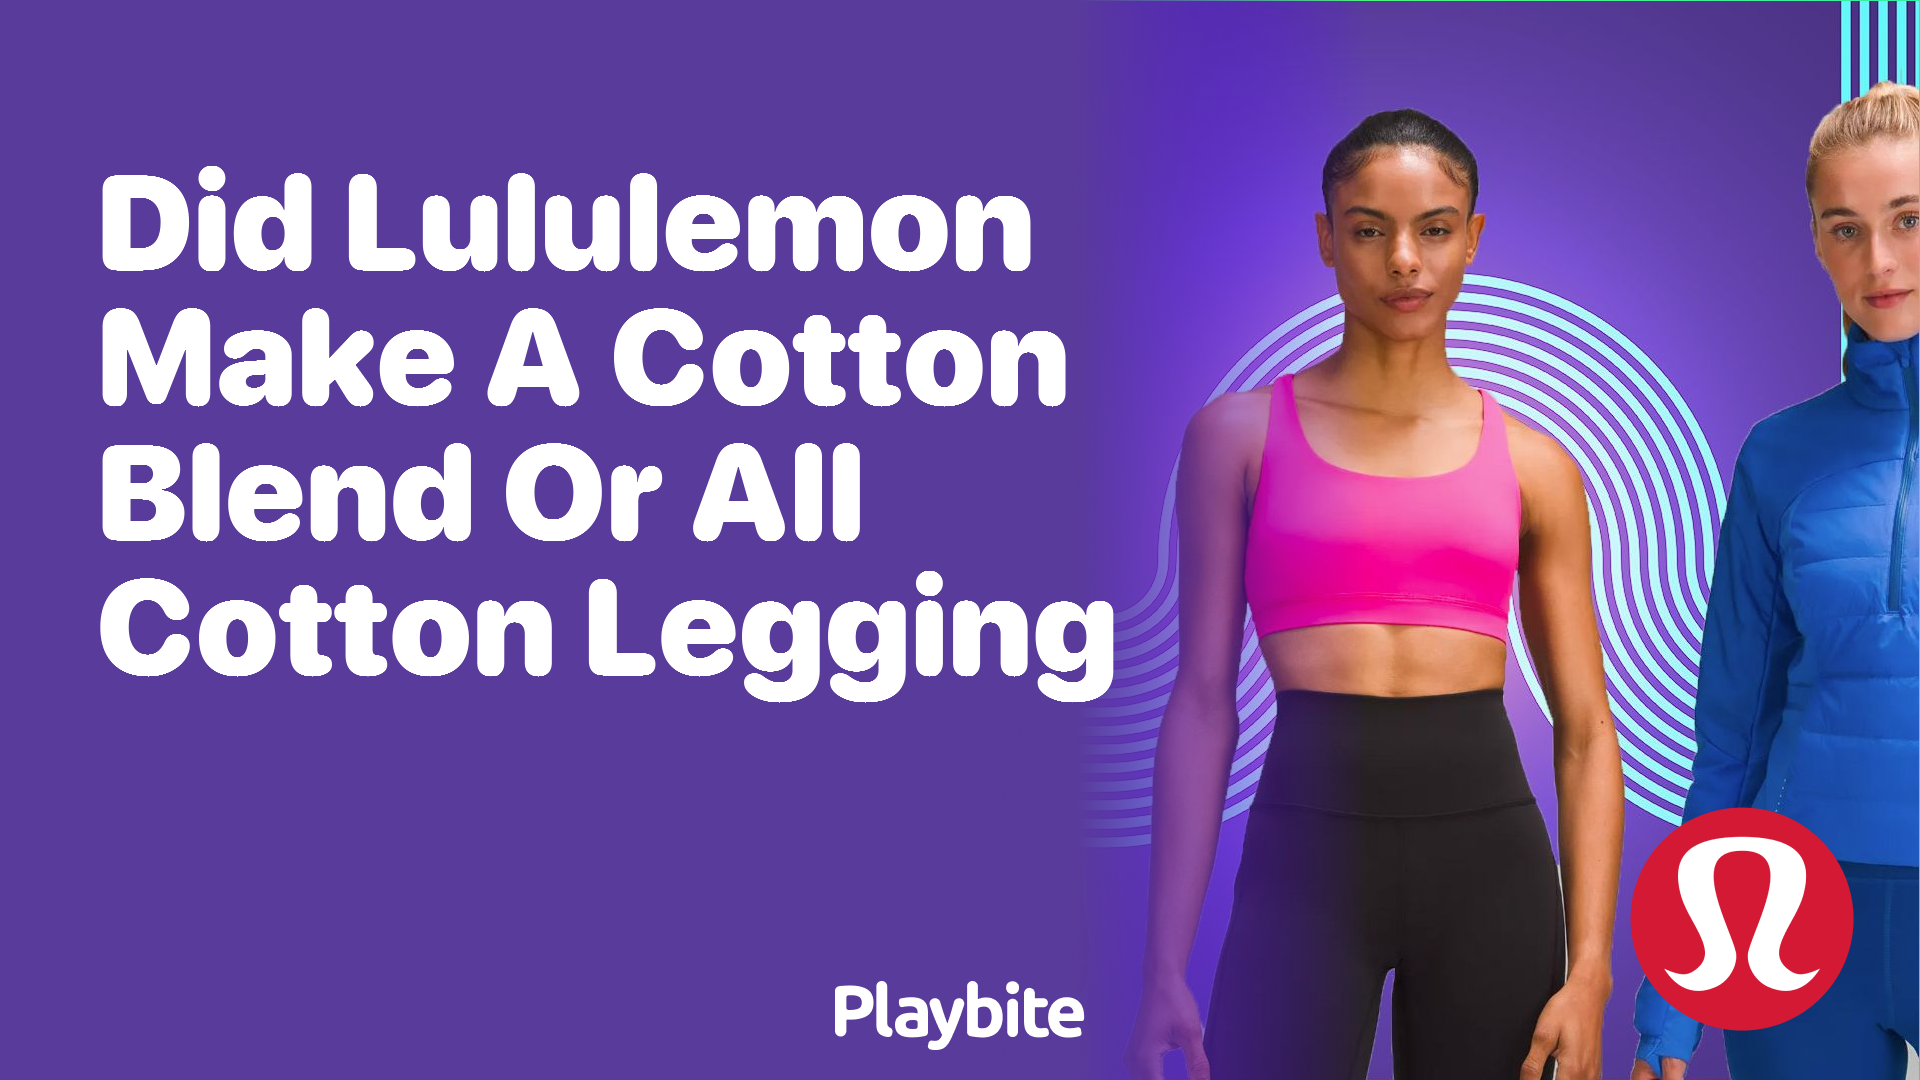 Did Lululemon Make a Cotton Blend or All Cotton Legging? - Playbite